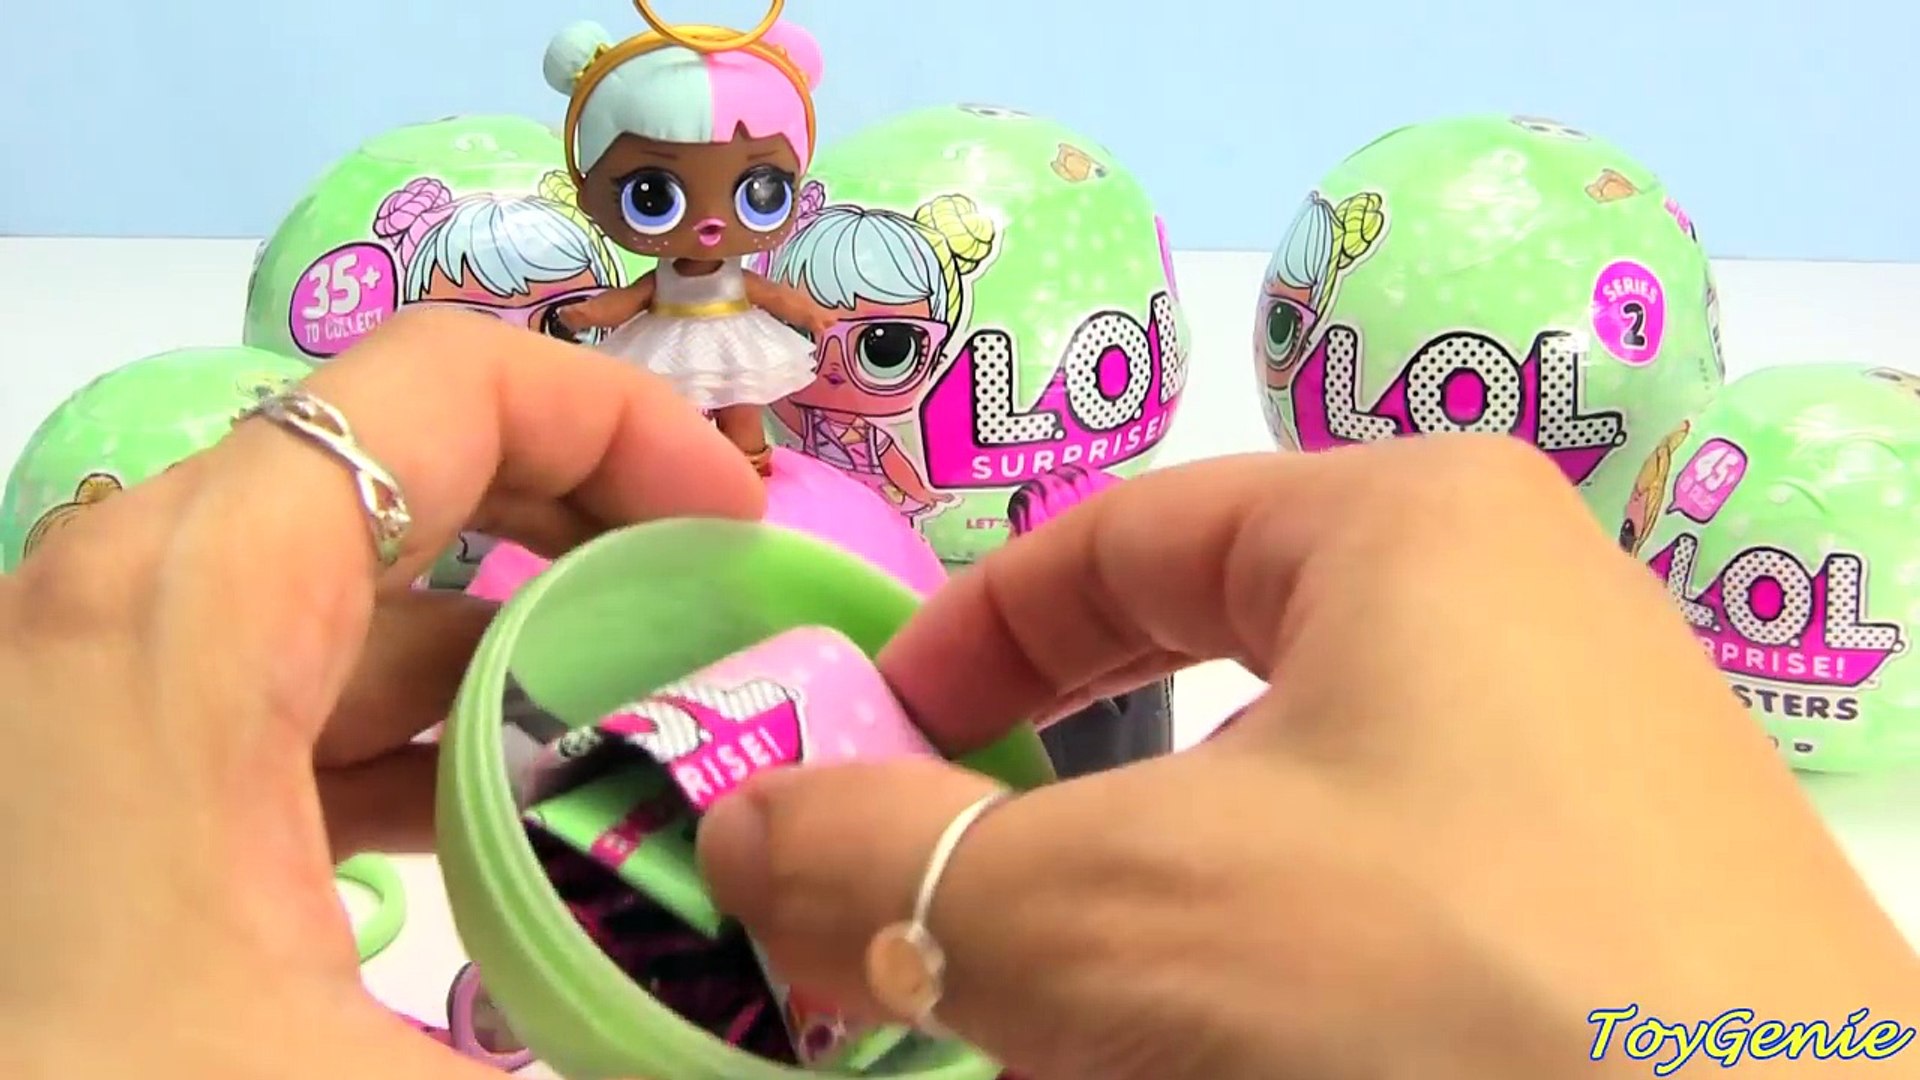 toy genie surprises lol dolls